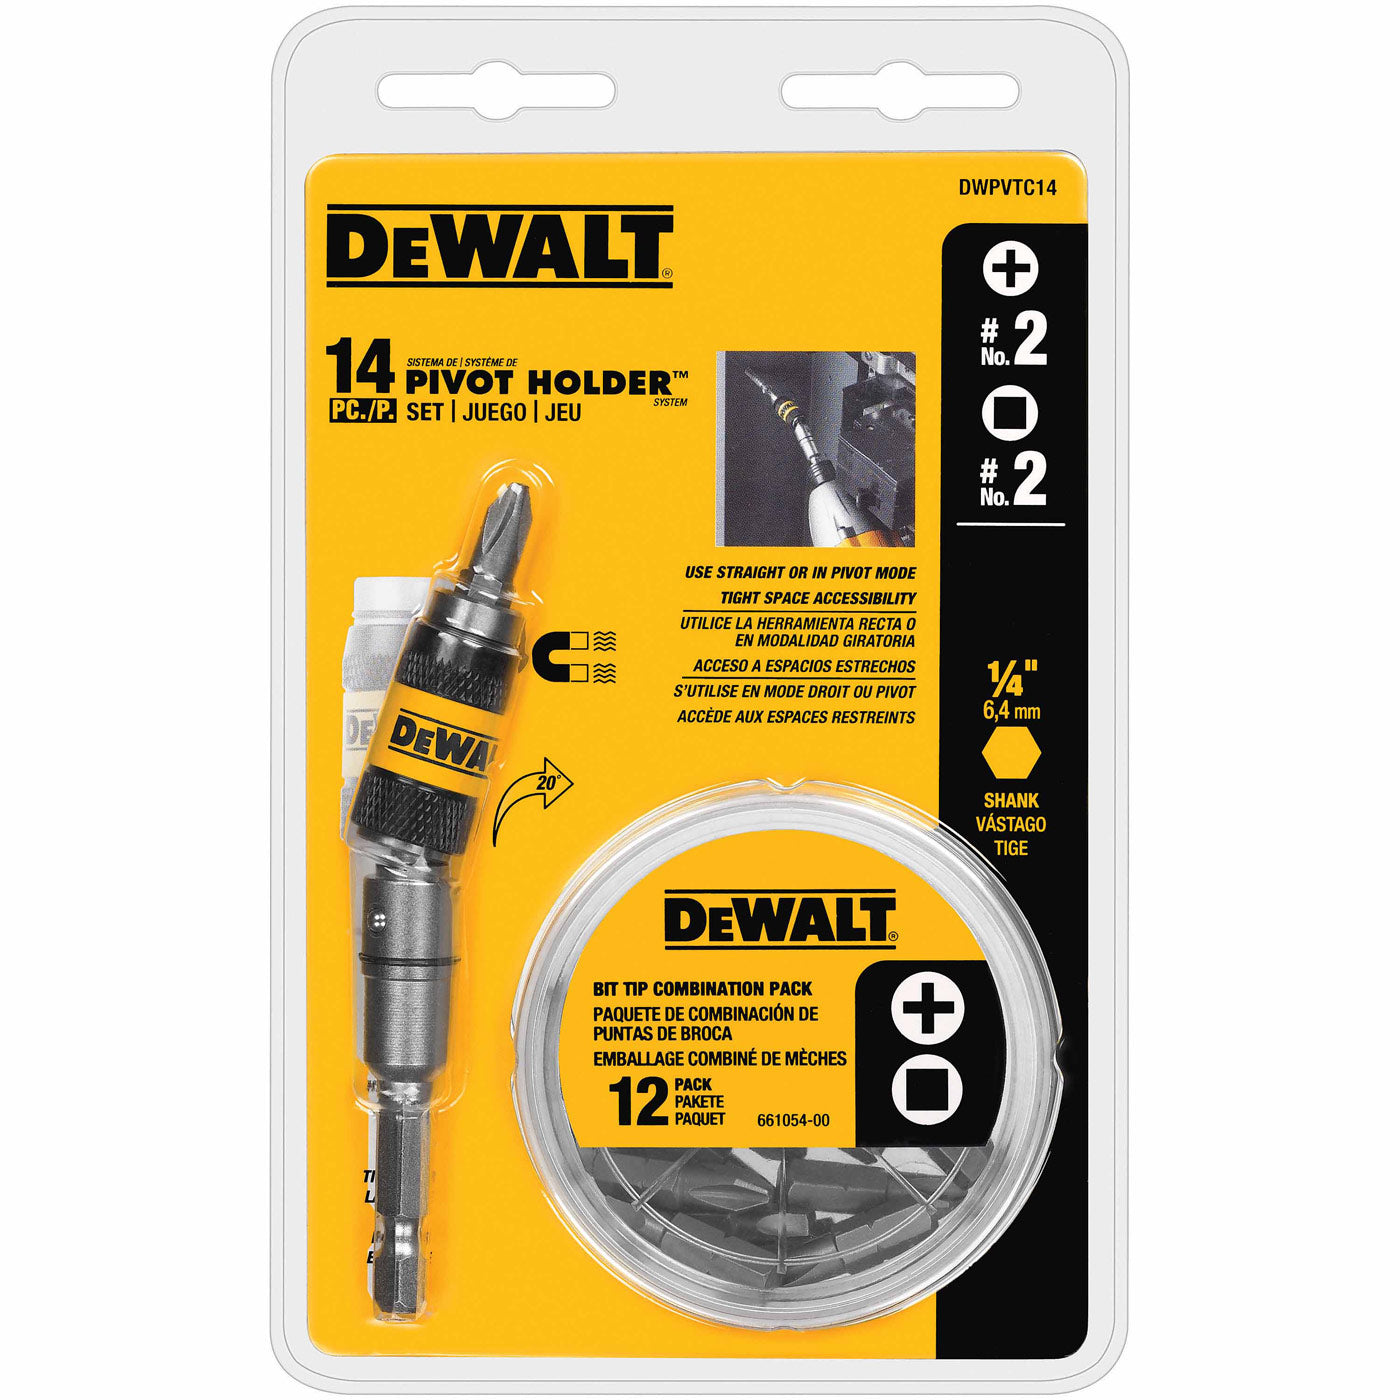 DeWalt DWPVTC14 14 Piece Pivot Holder Screwdriver Set